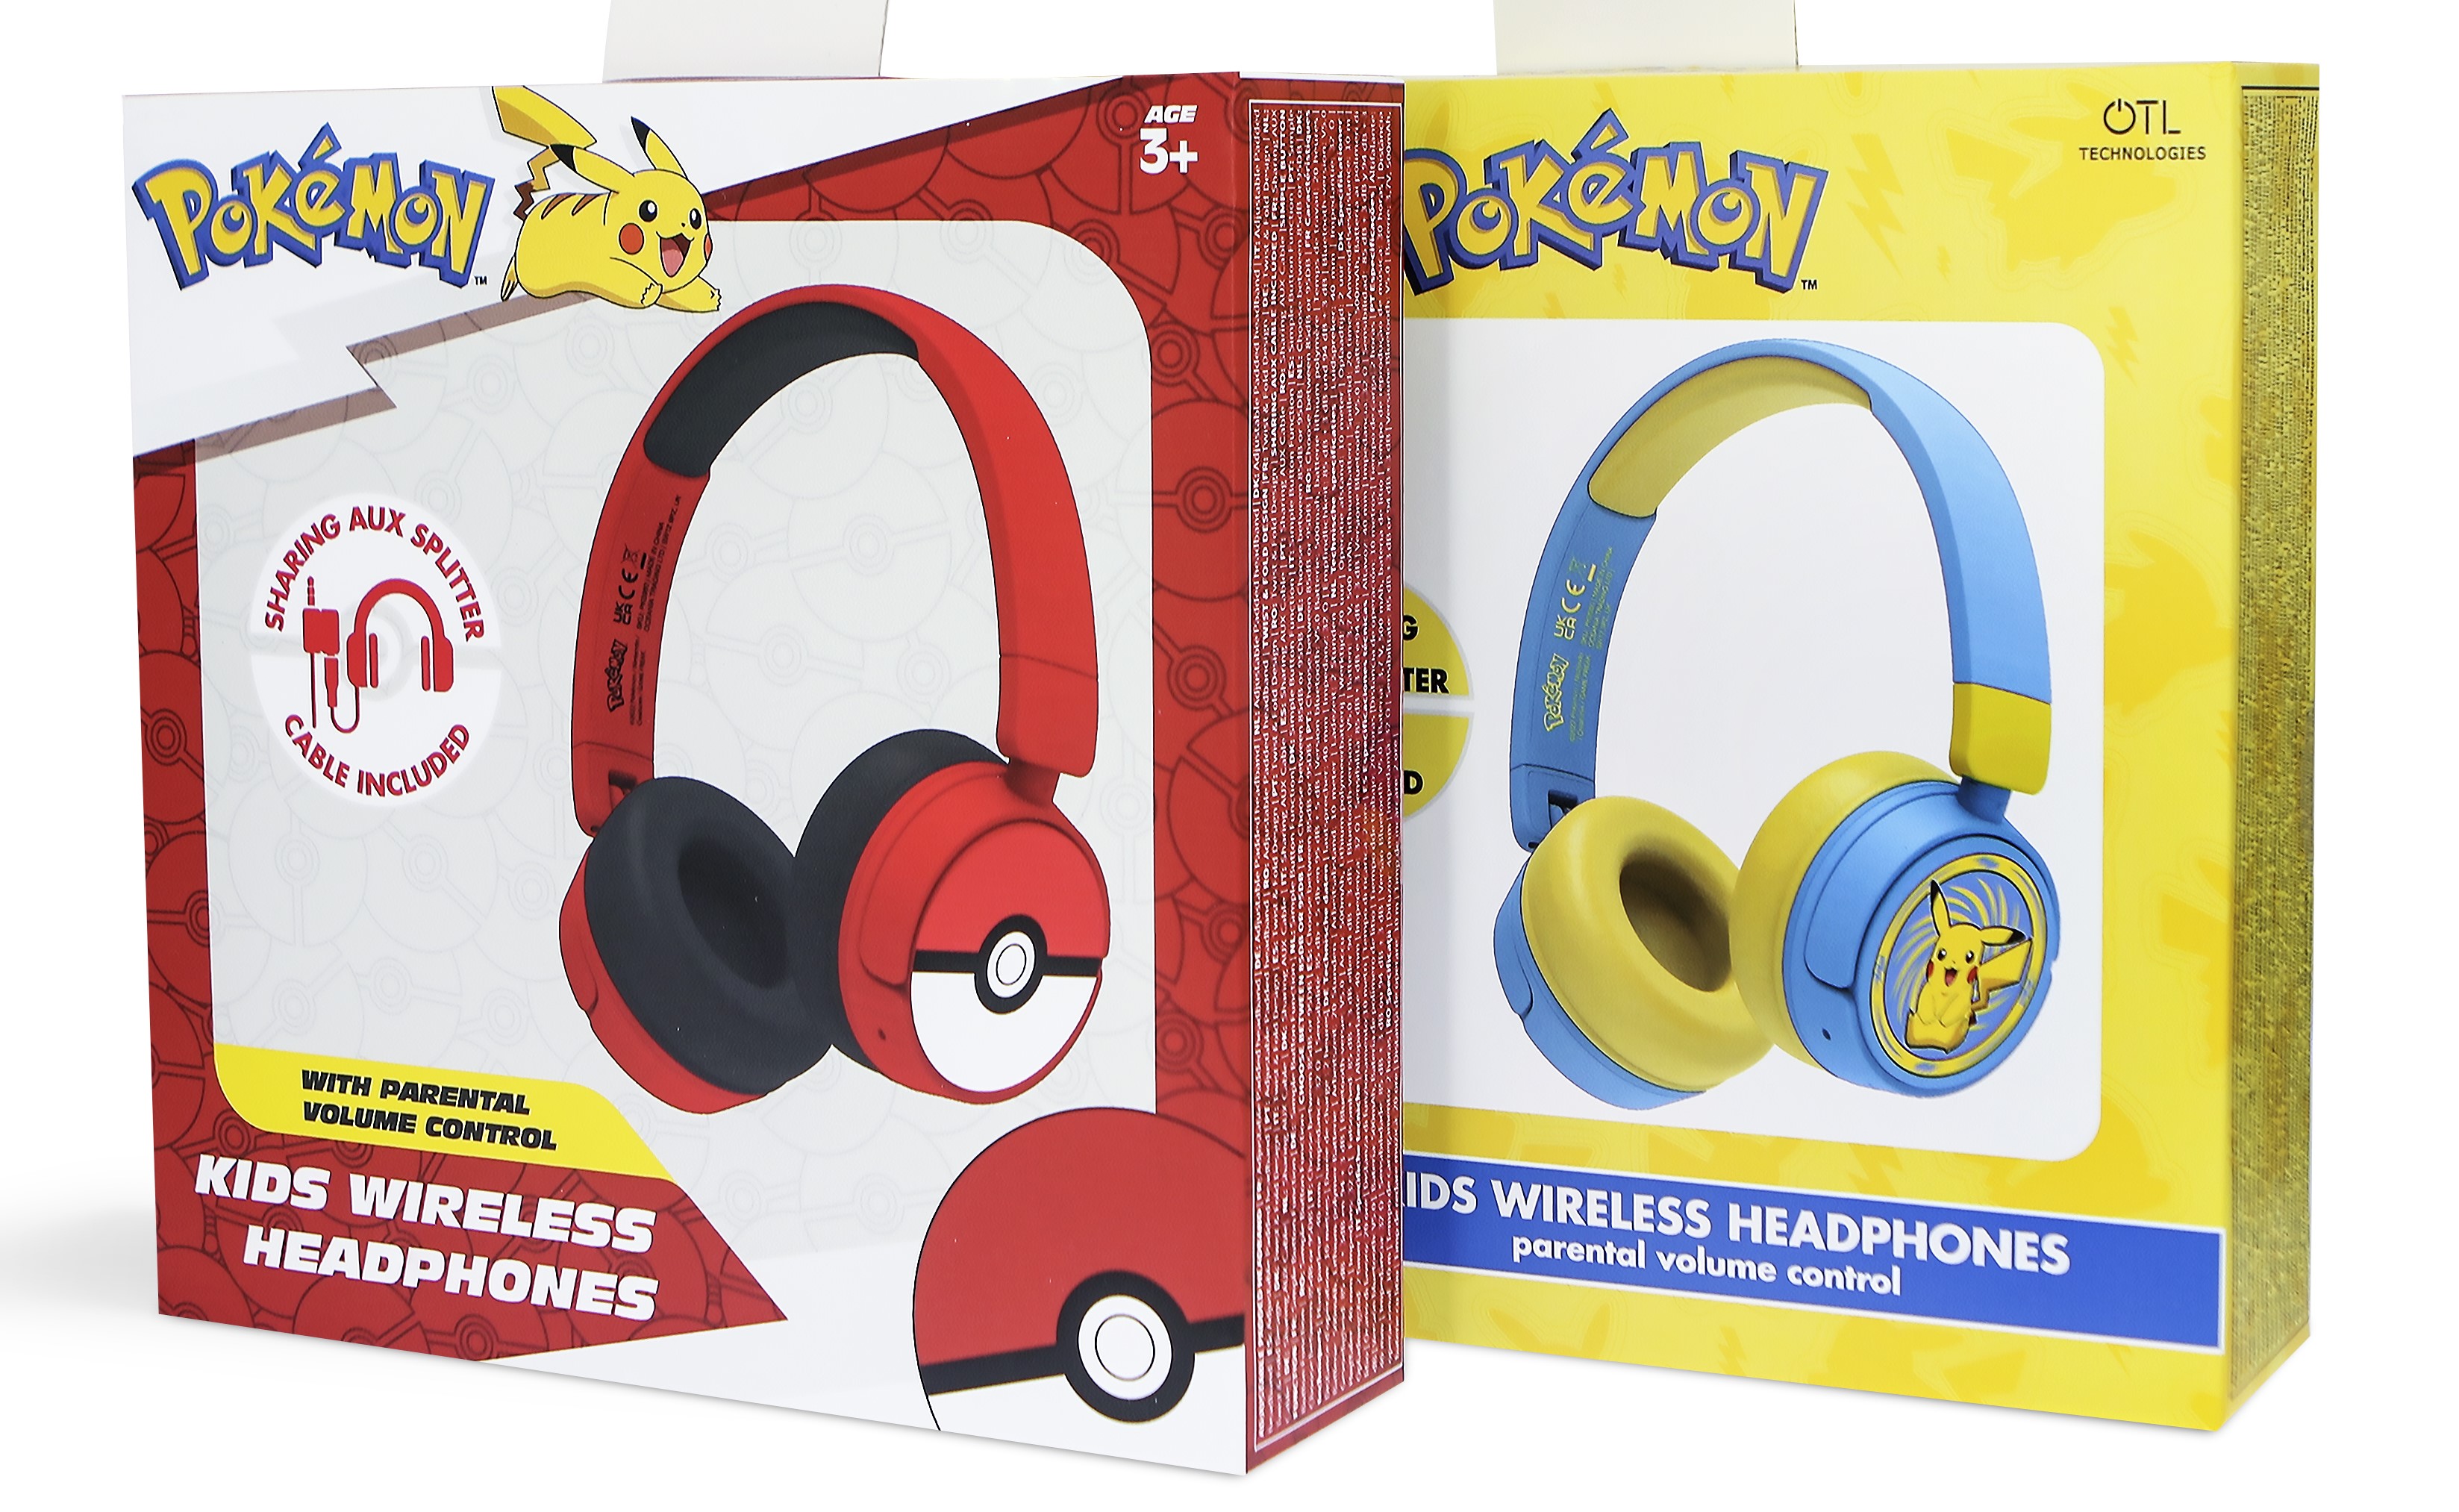  Children's headphones OTL Technologies Pokemon Pickachu Wireless Blue/Yellow